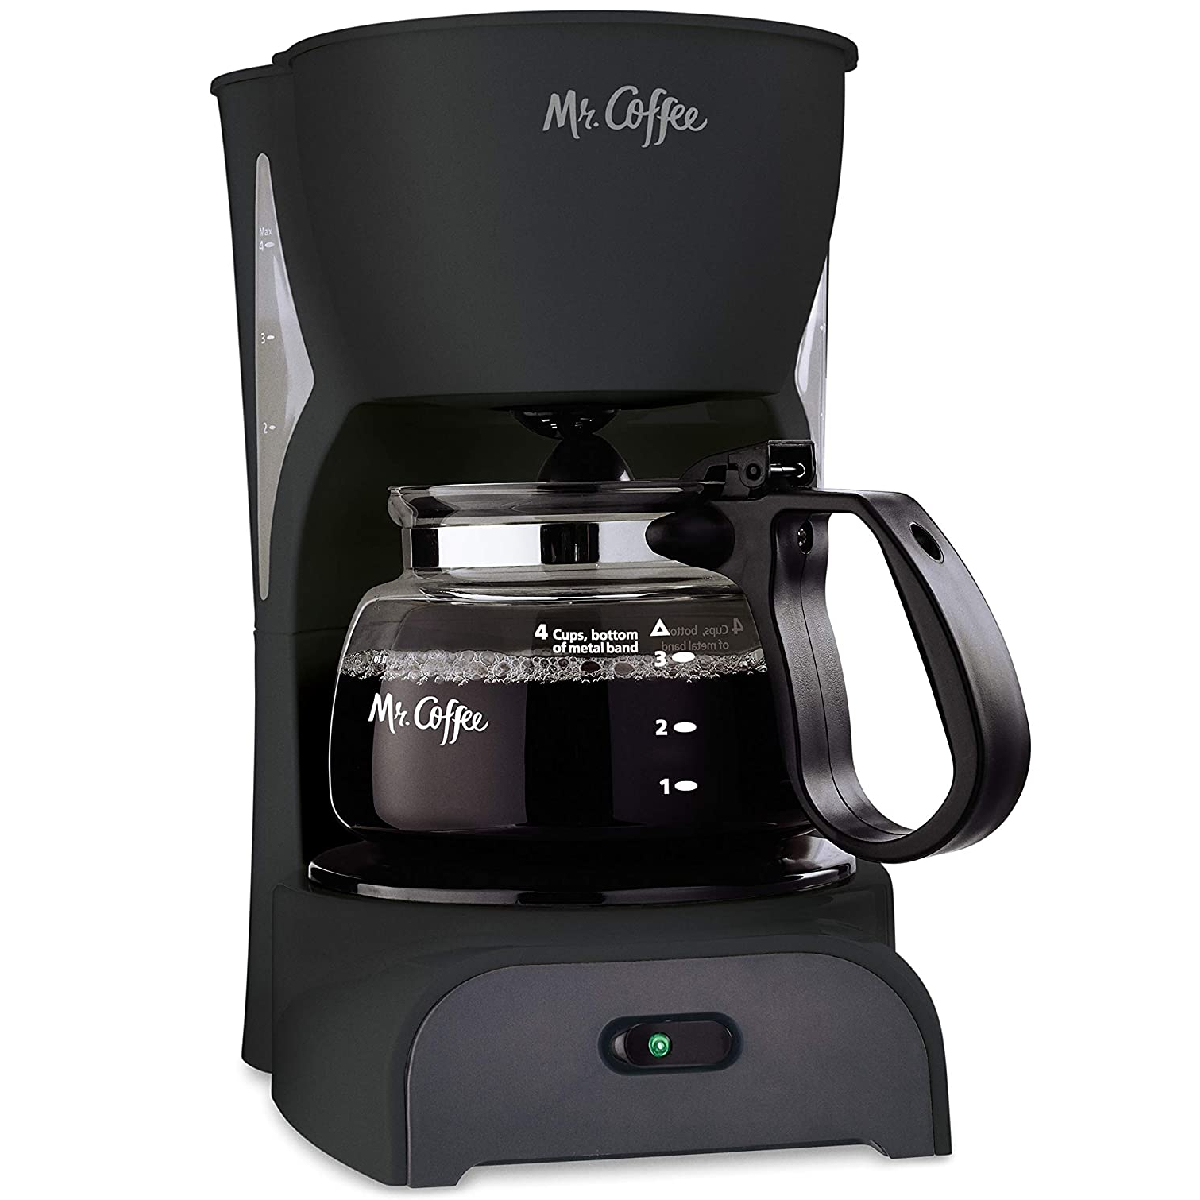 Mr. Coffee Simple Brew Coffee Maker 4 Cup Drip Coffee Maker